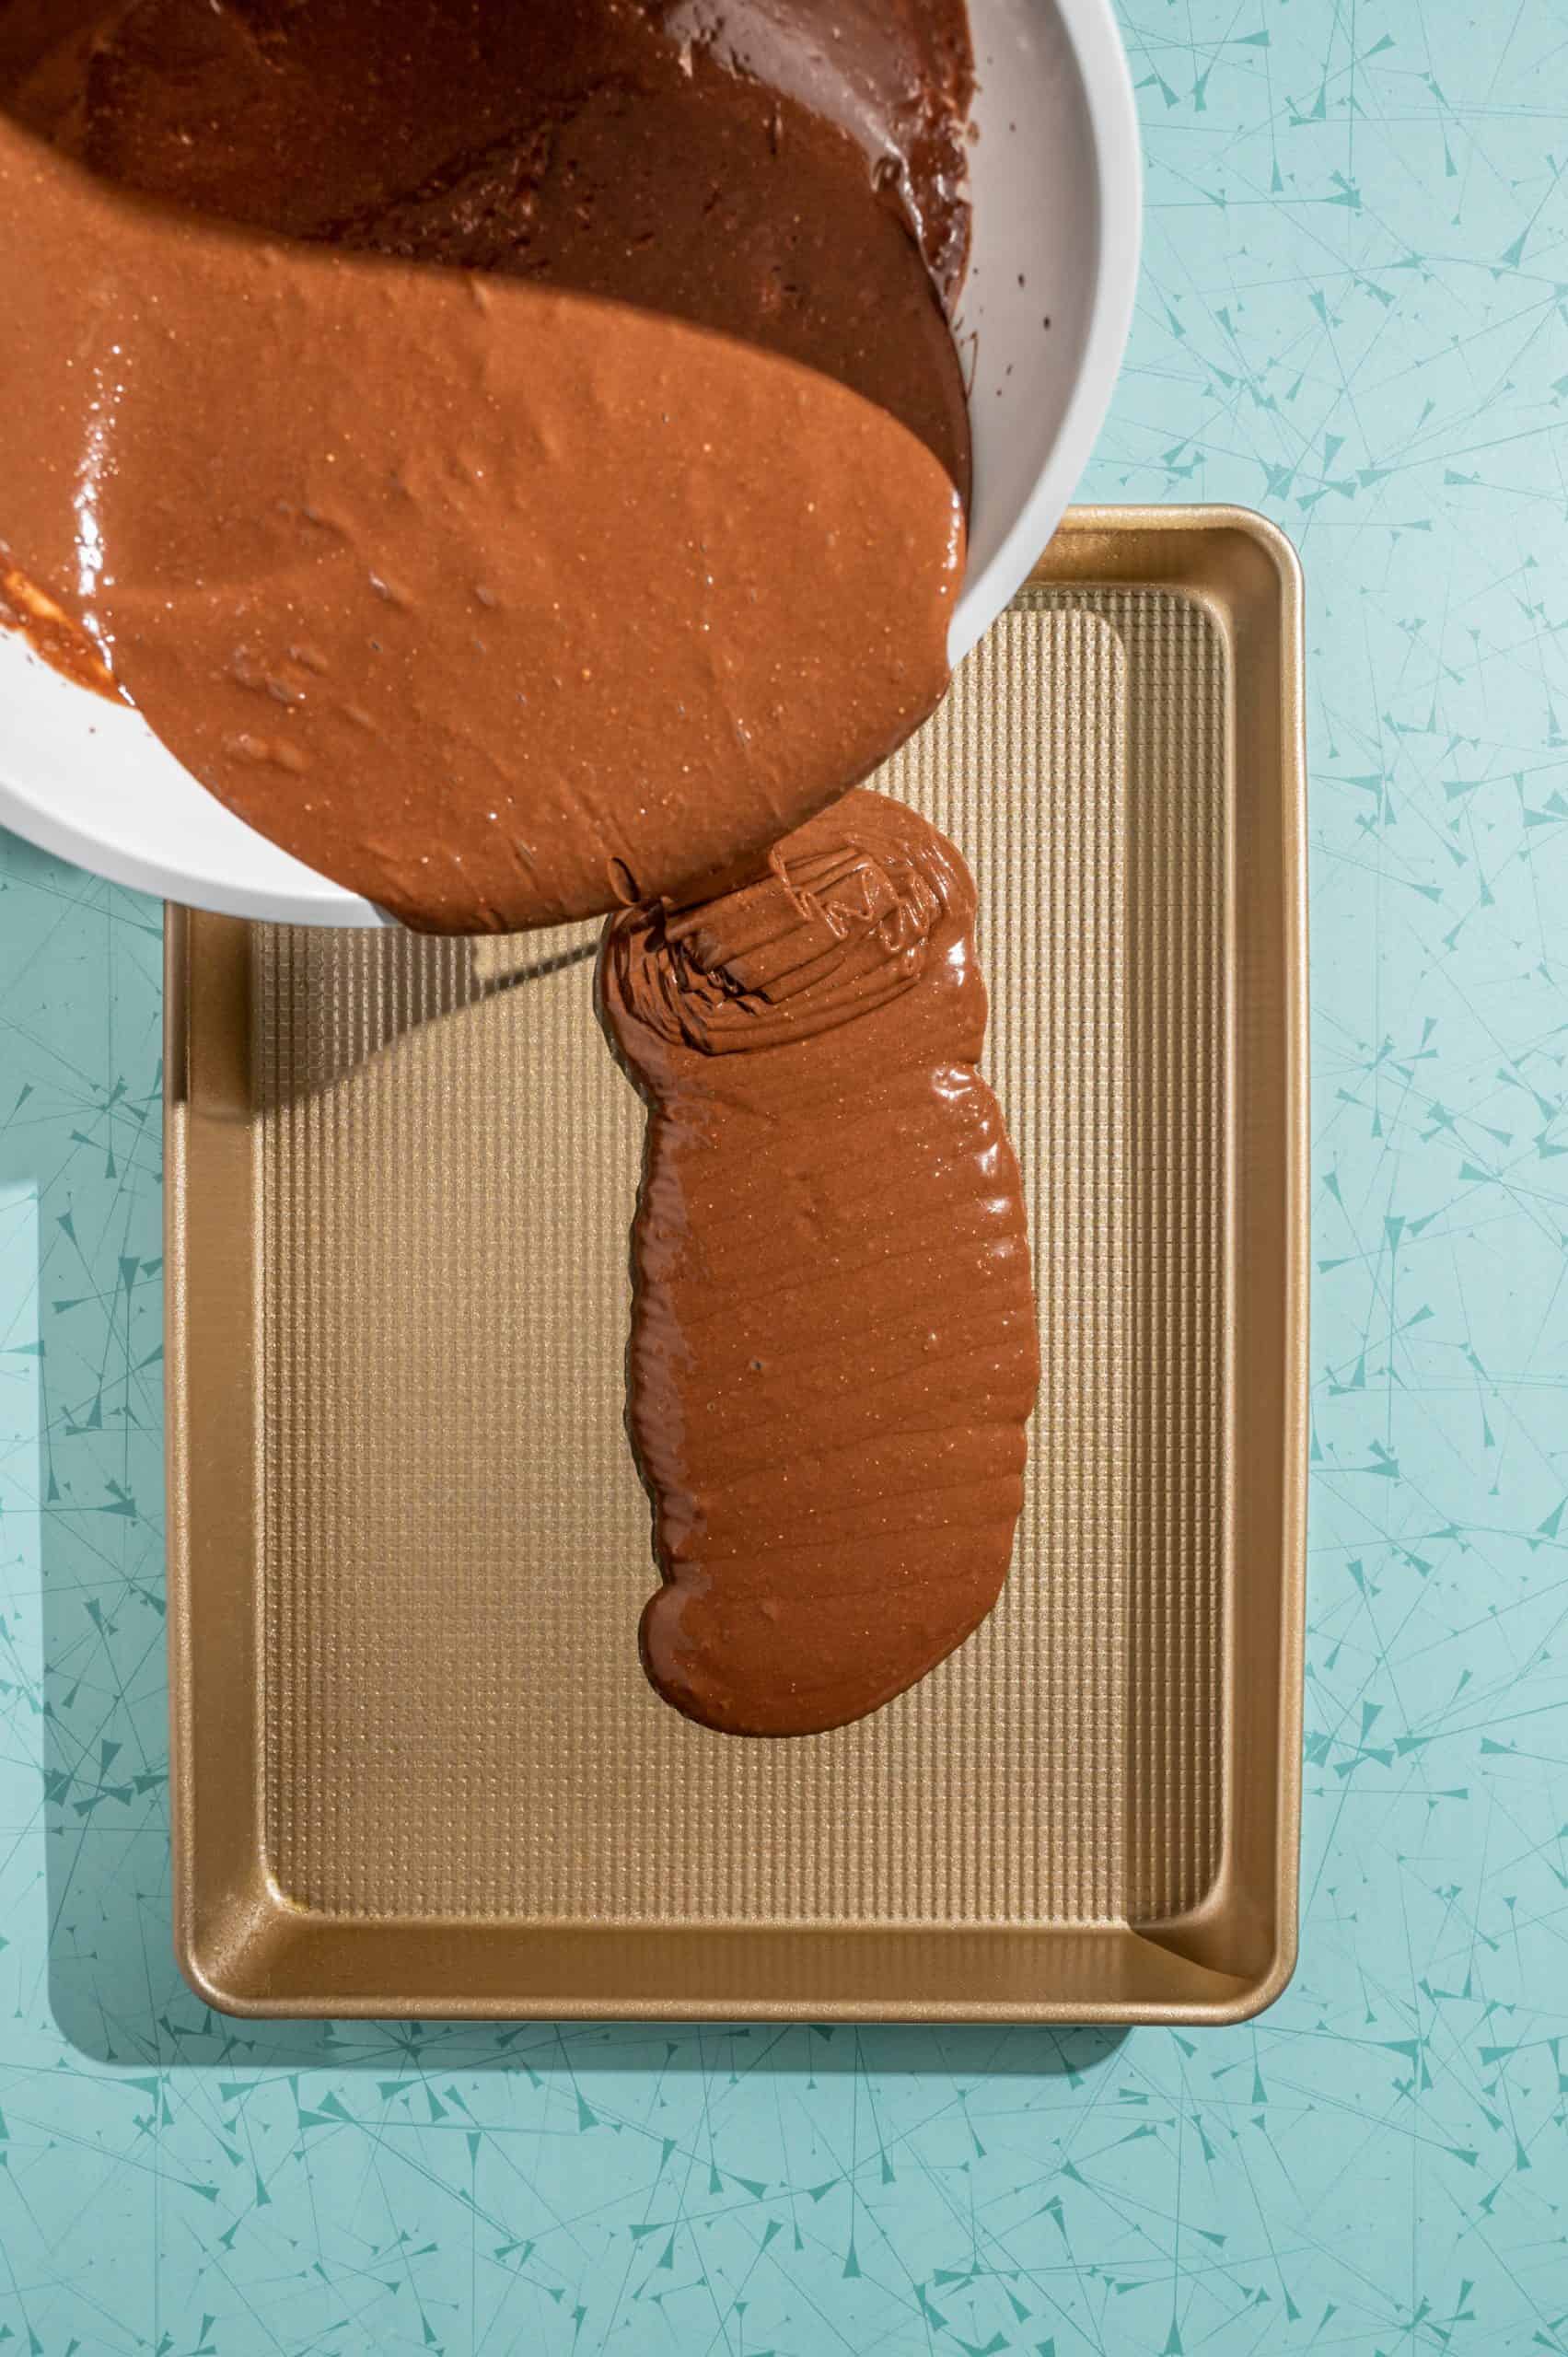 pouring chocolate cake batter into a shallow rectangular baking pan